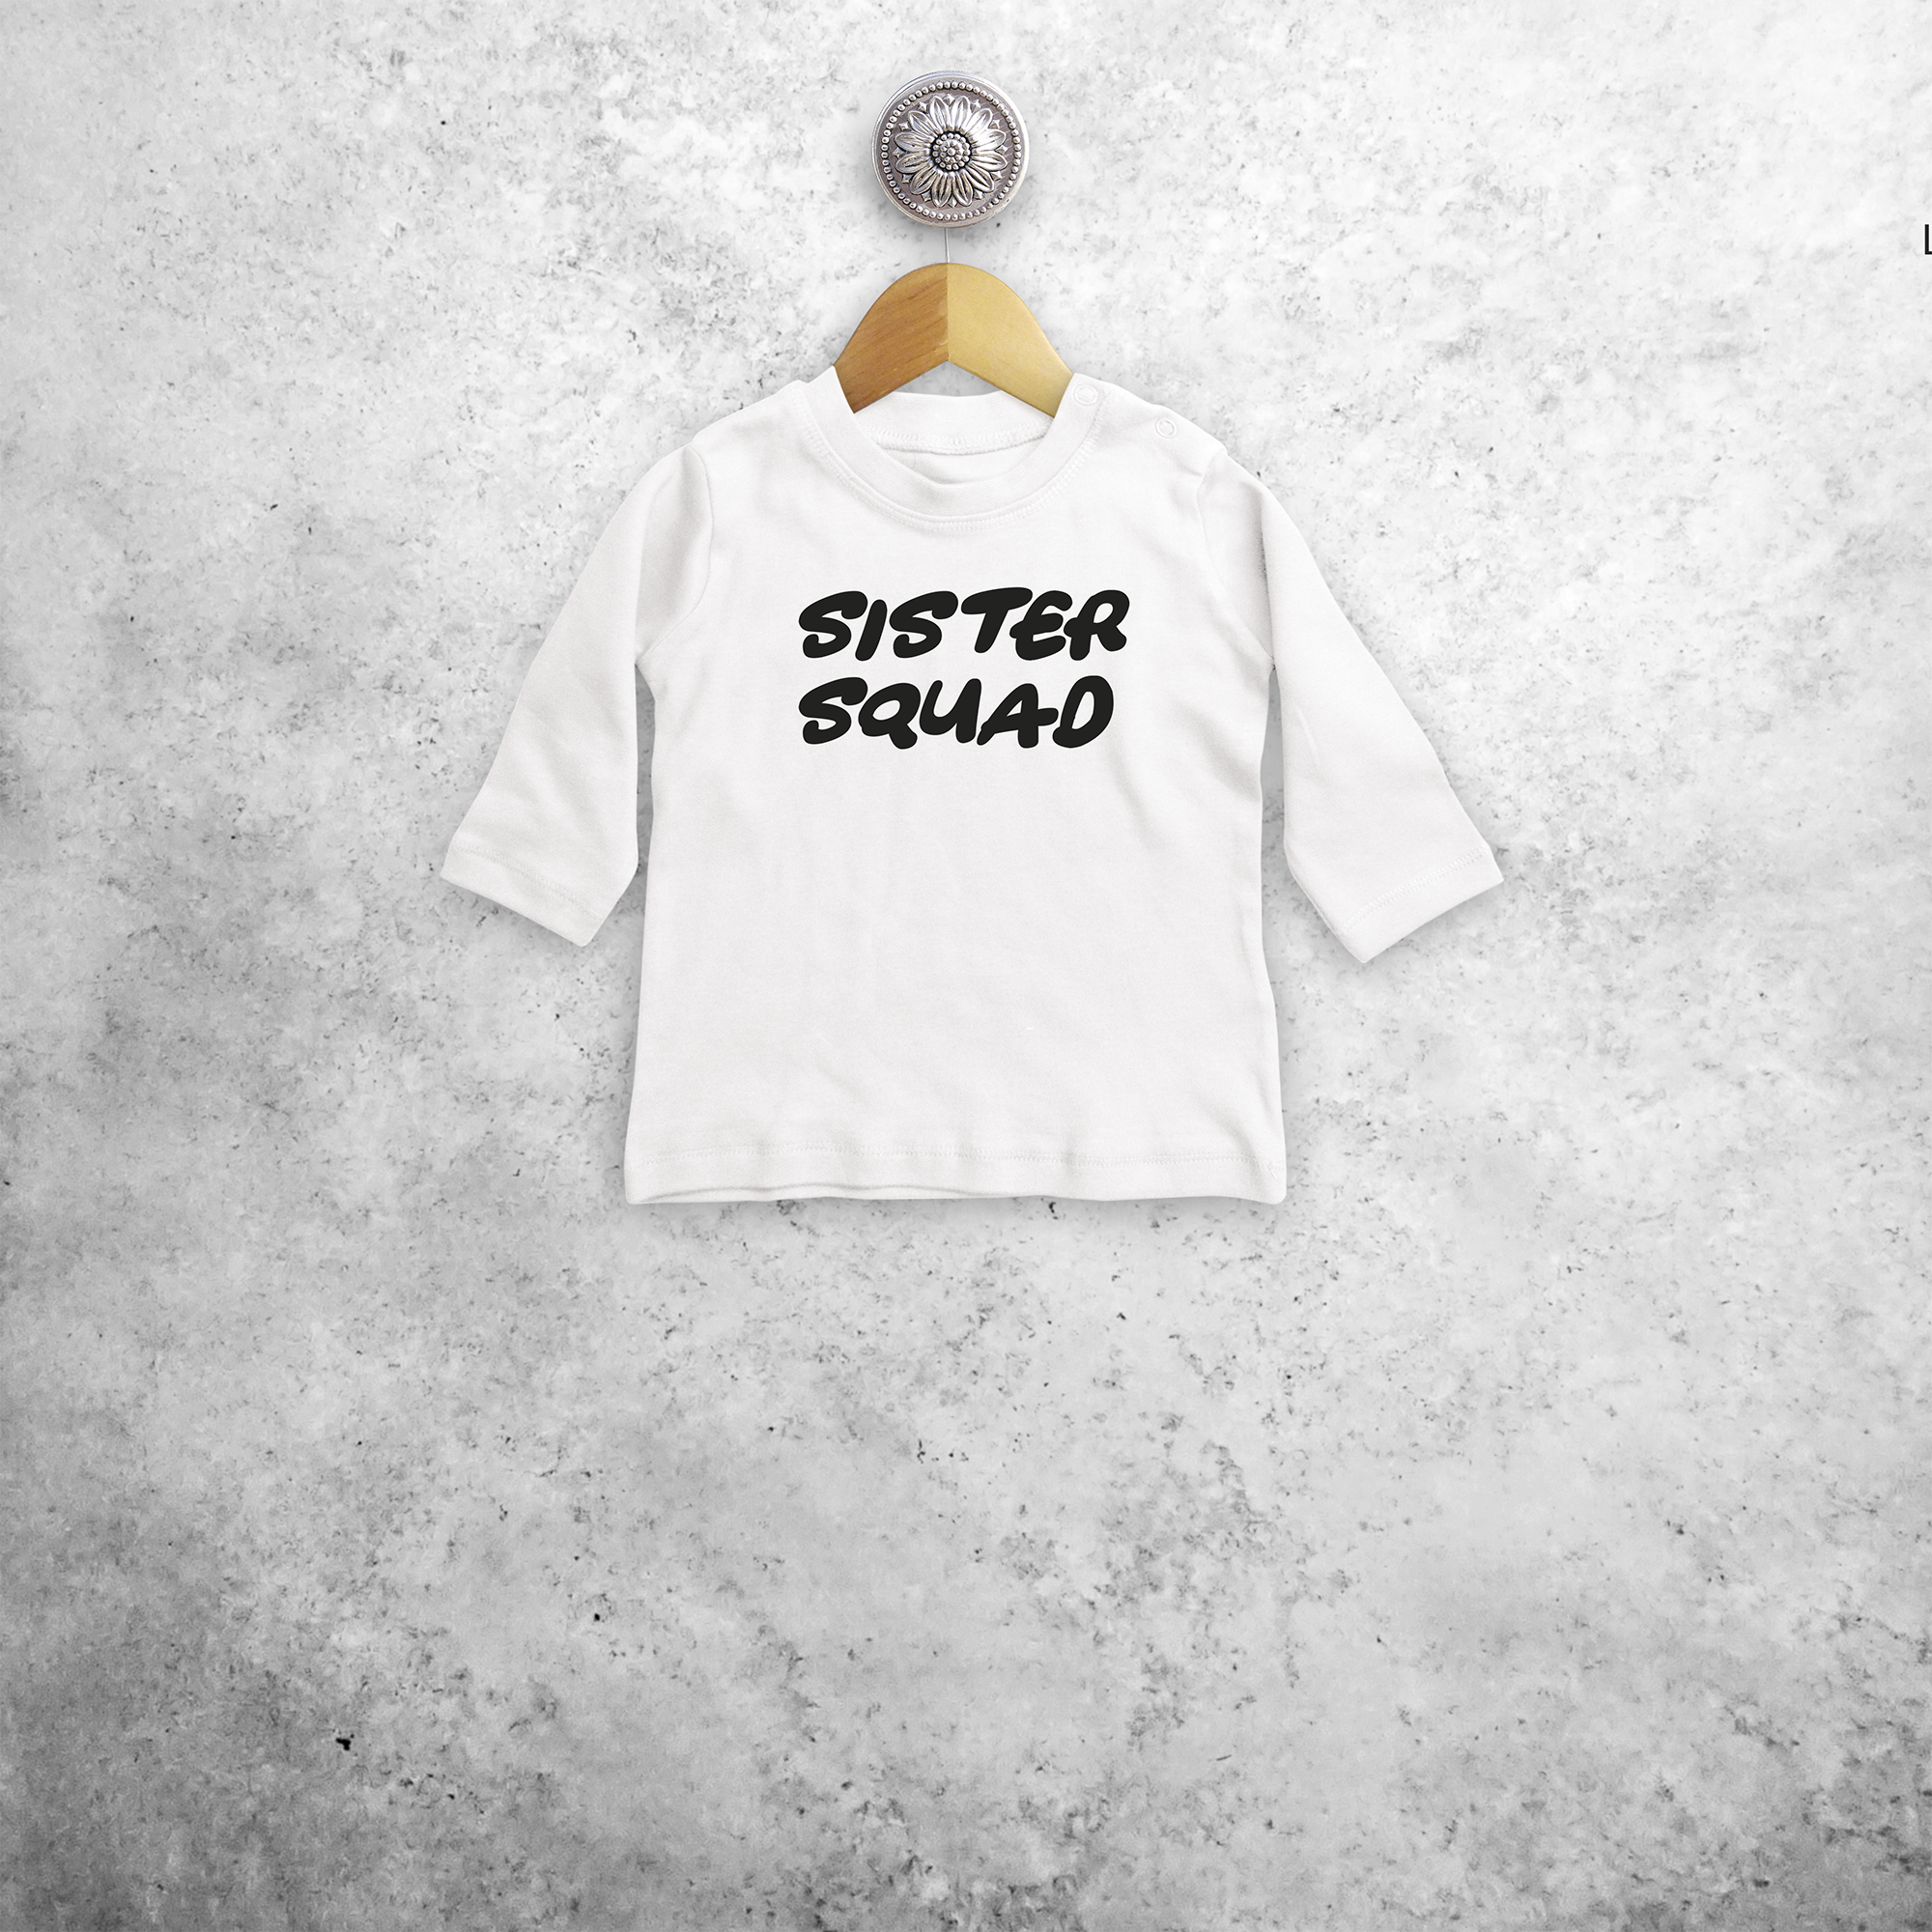 'Sister squad' baby longsleeve shirt